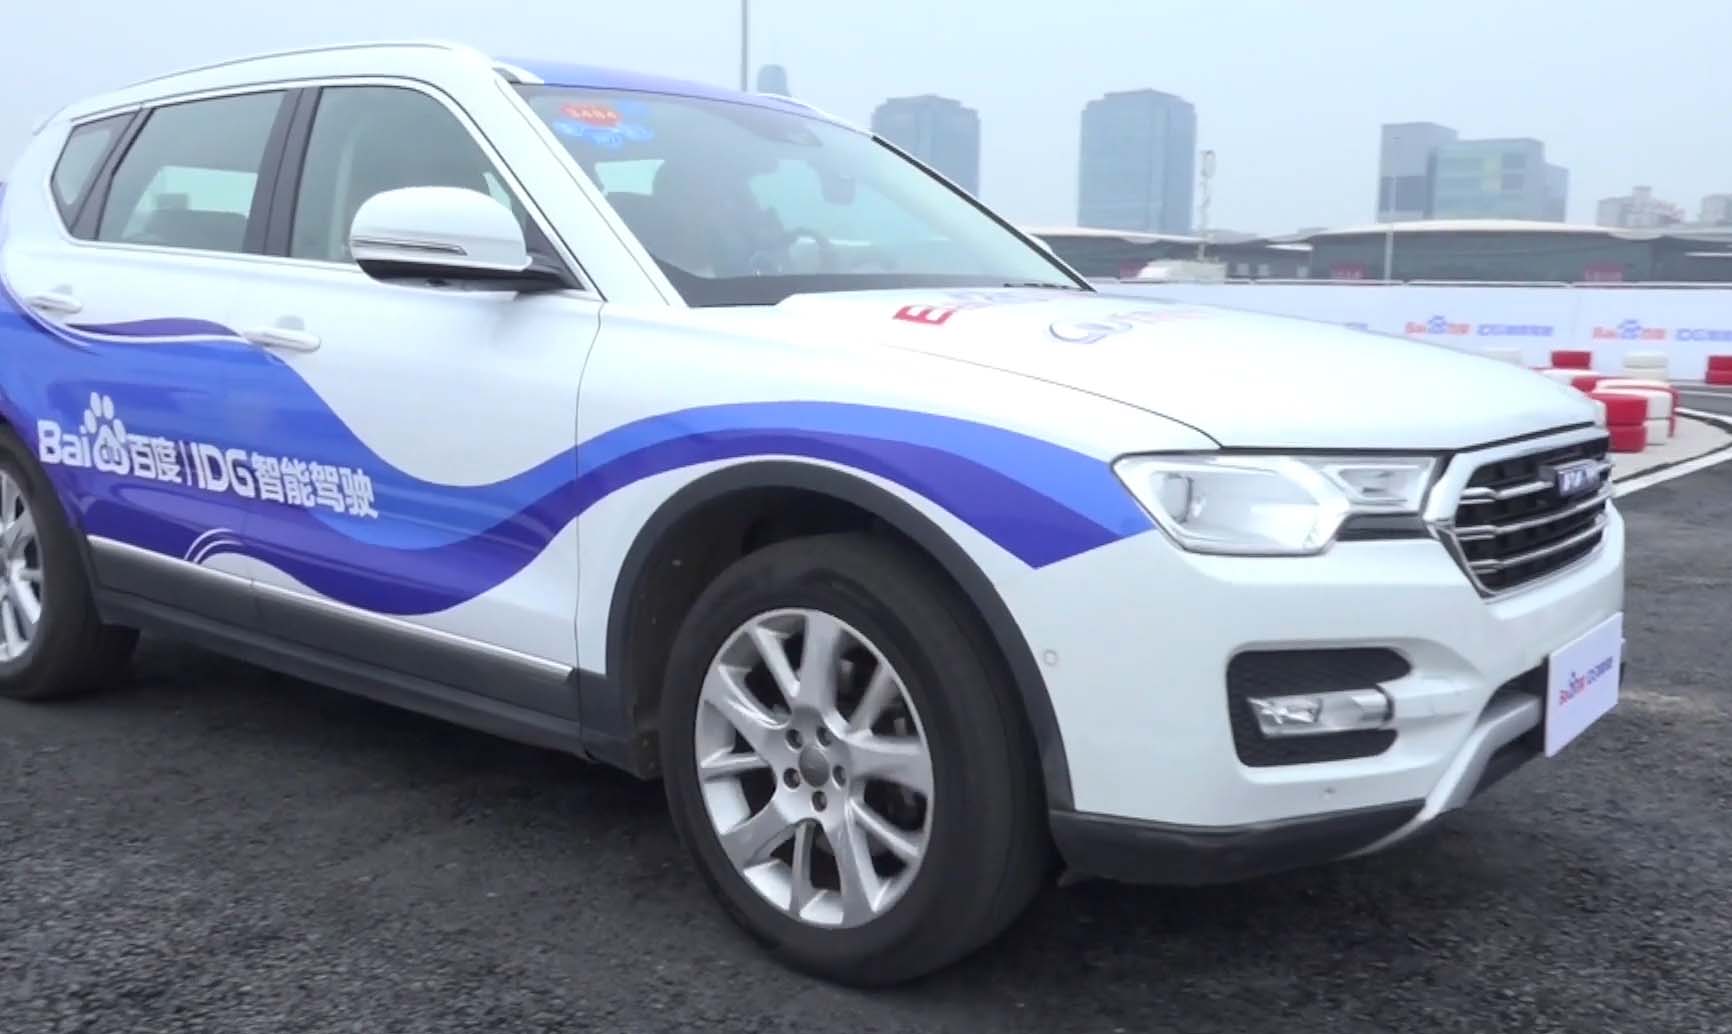 Baidu's driverless car platform